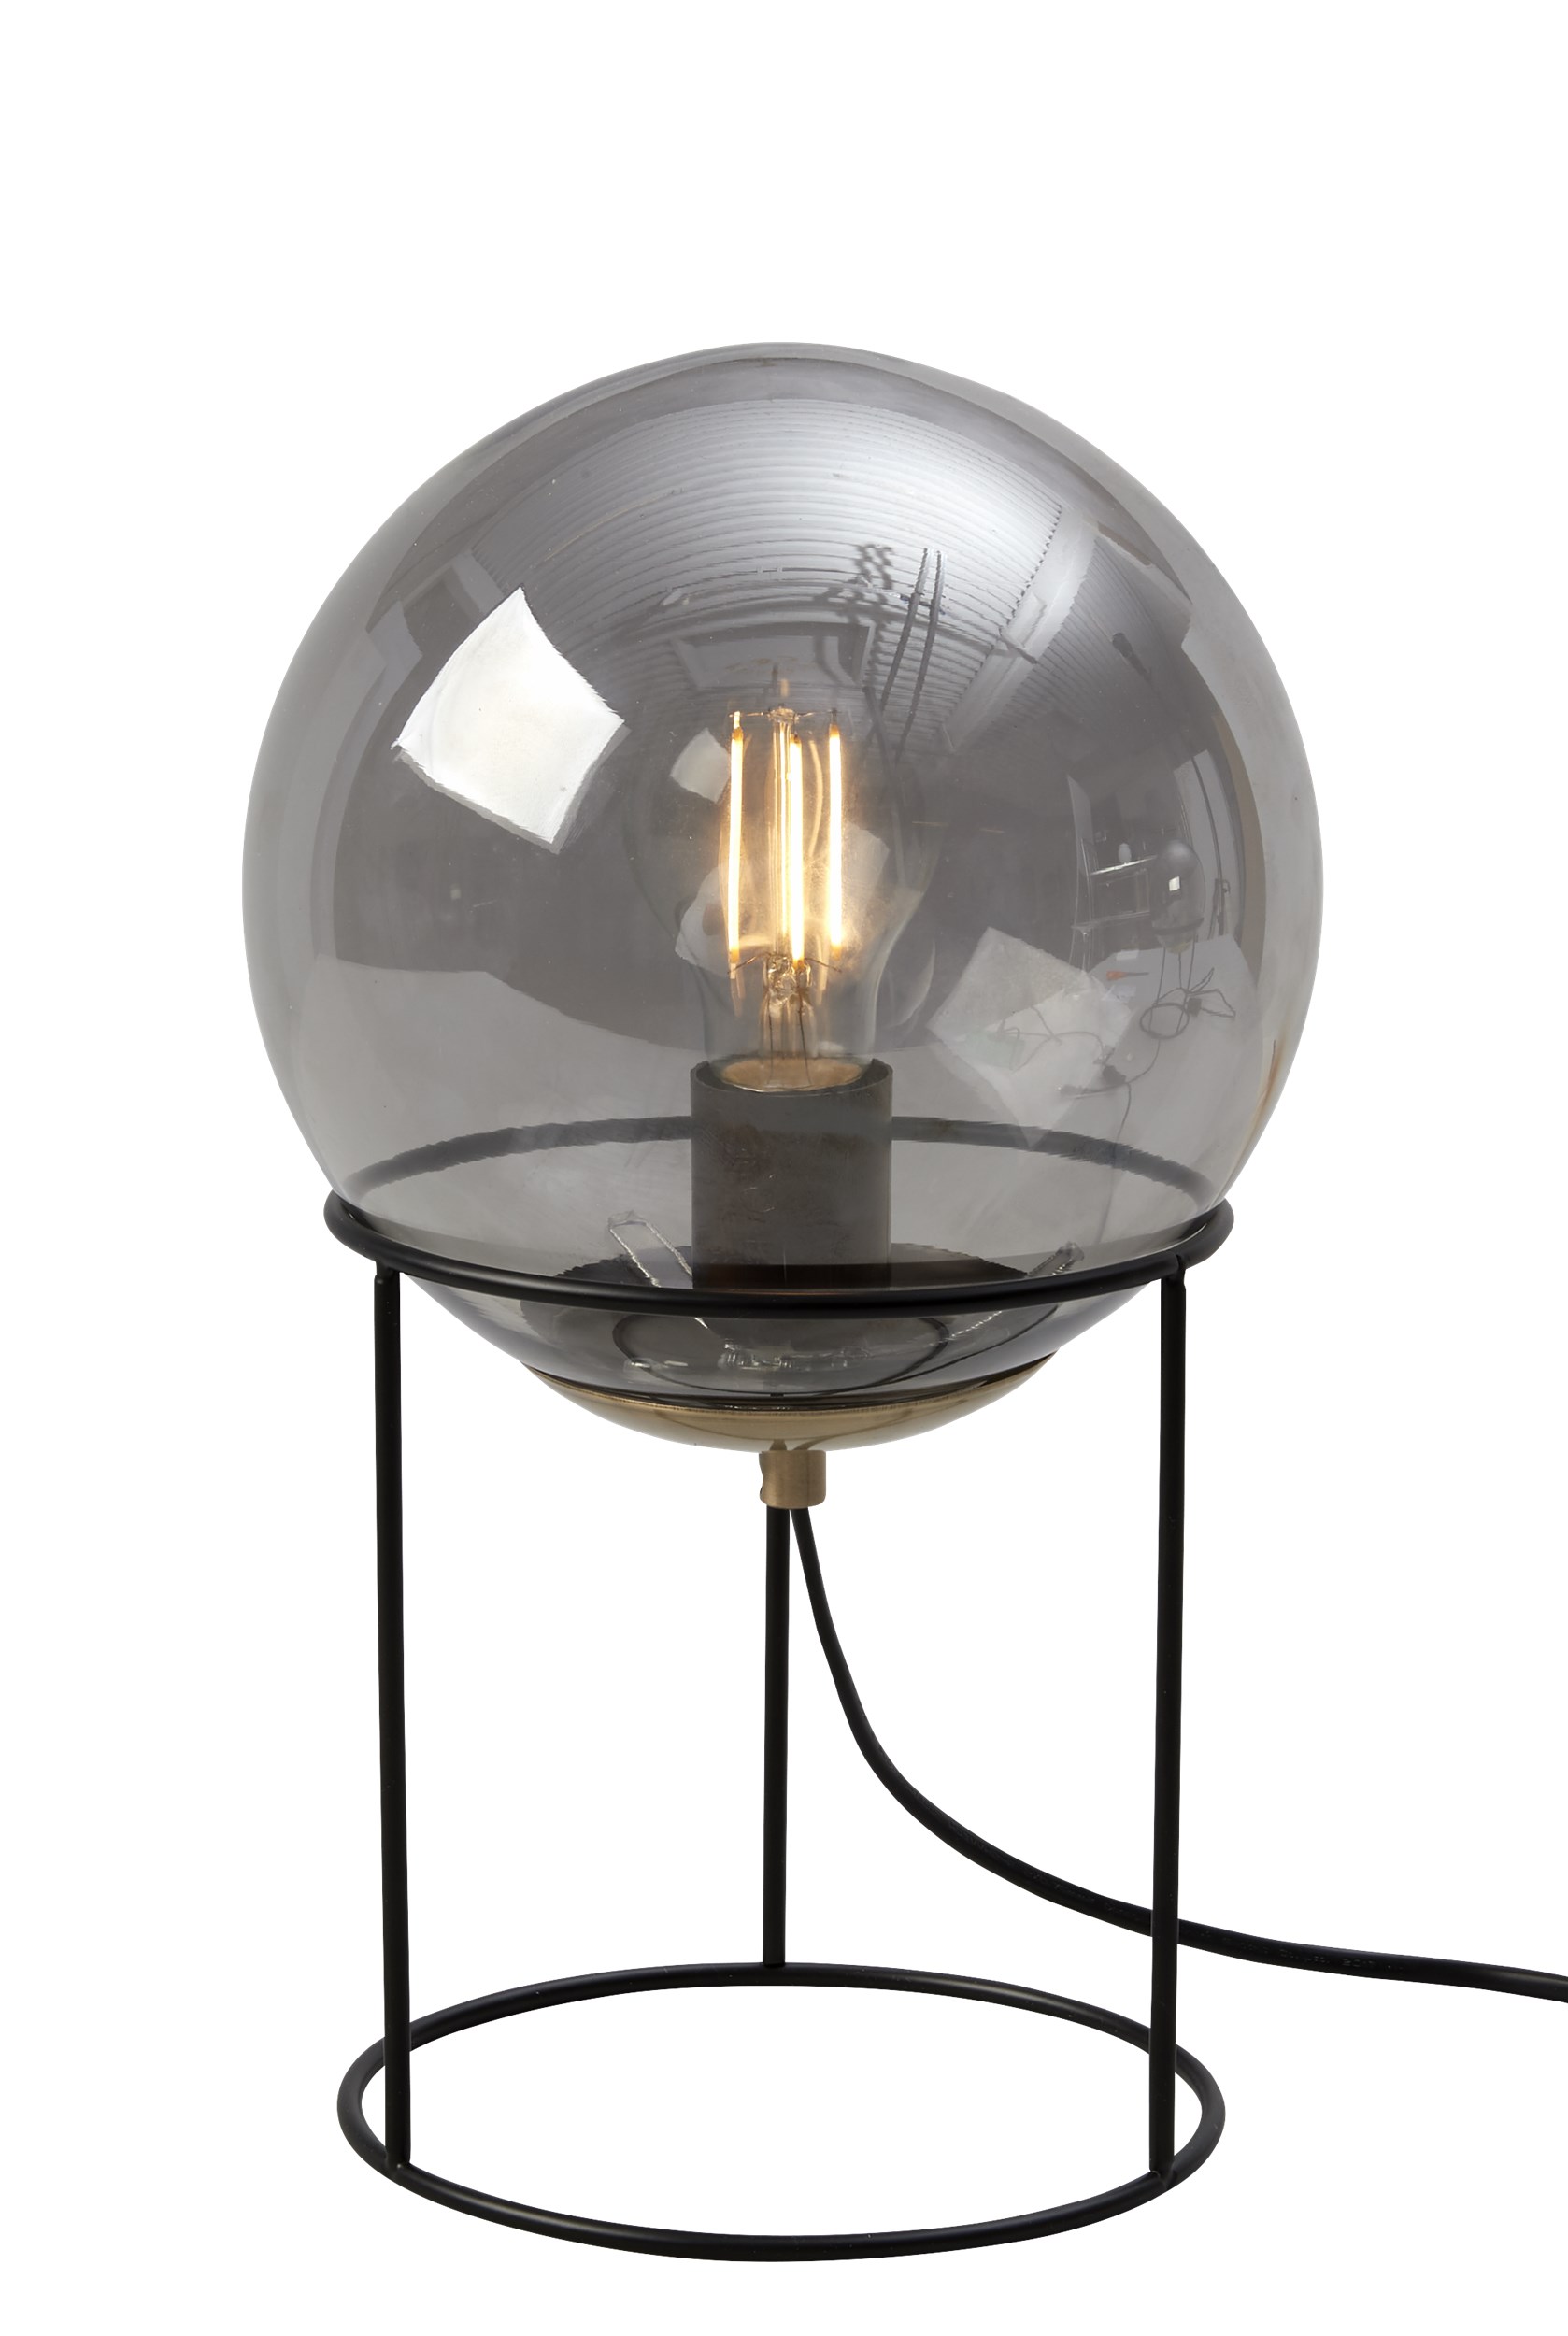 Moon Bordslampa 34 x 20 cm - Svart metallstomme, Smoke glasskärm och svart sladd